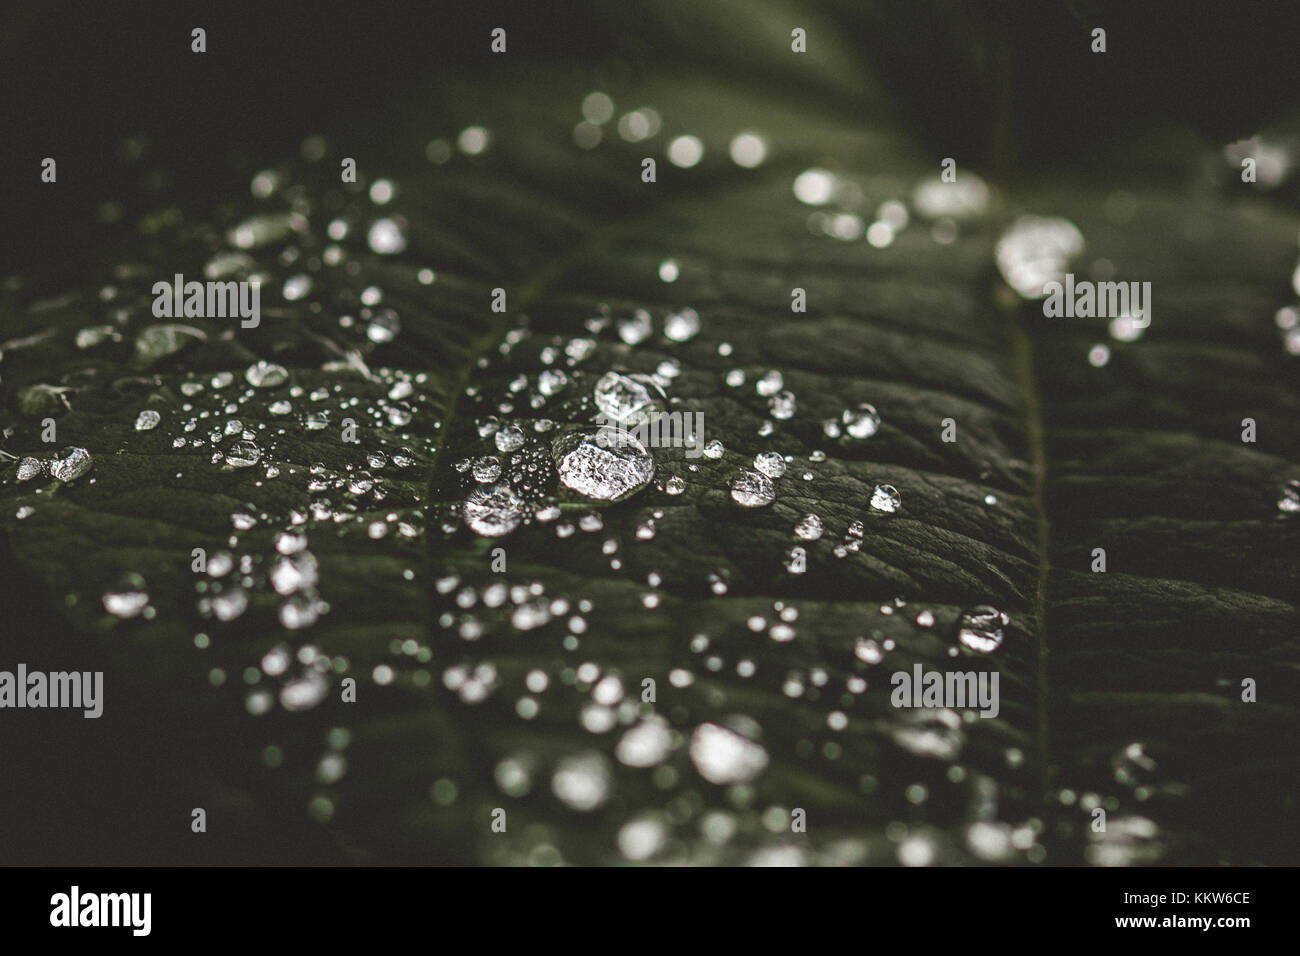 Raindrops on leaf Stock Photo